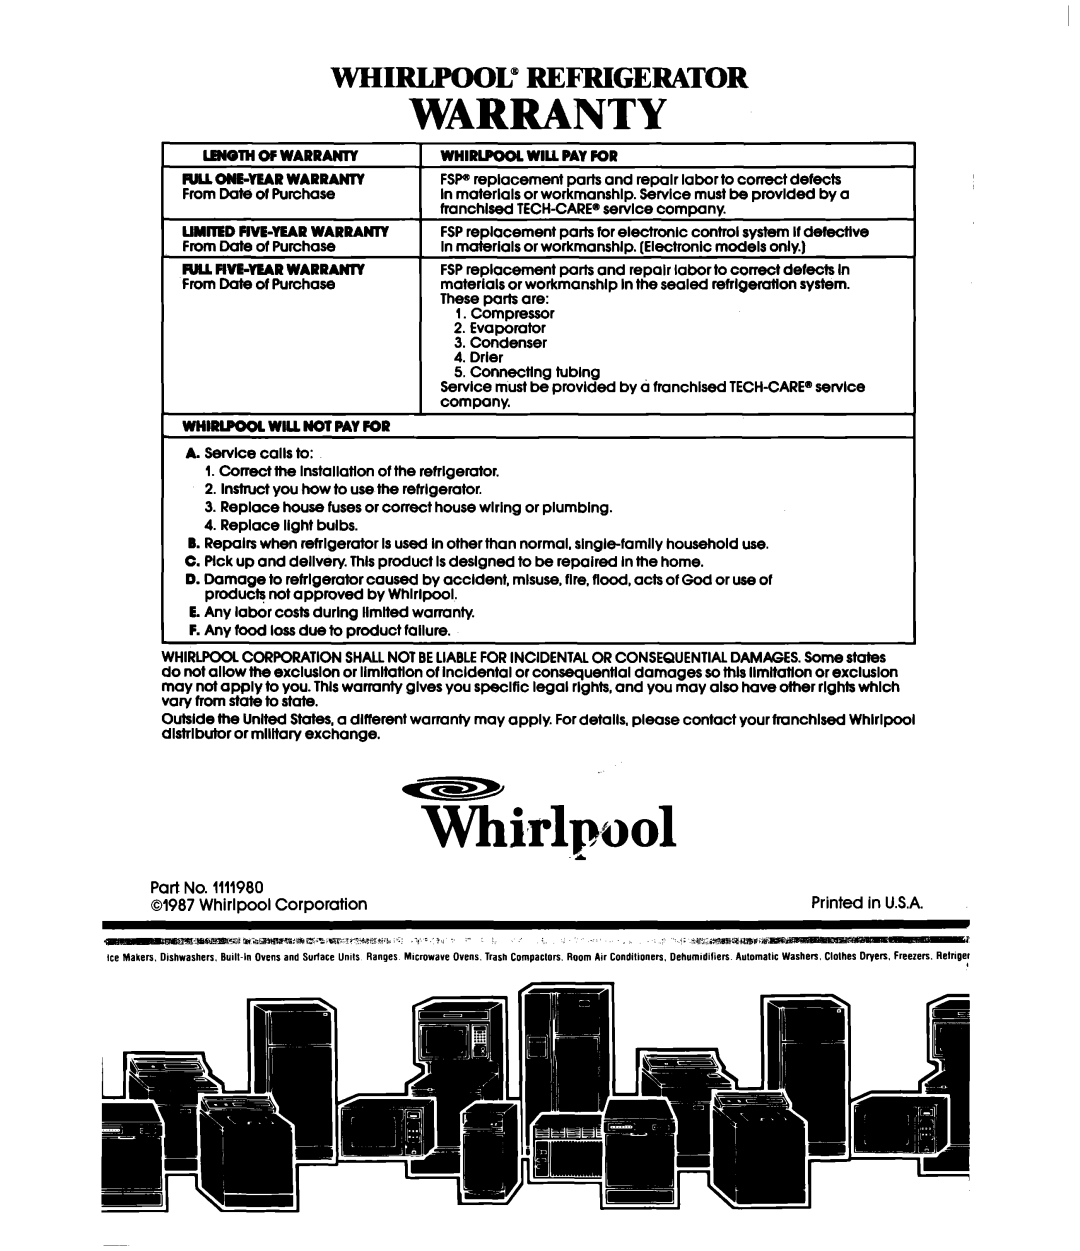 Whirlpool ET18XM manual Warranty, Tzirlpool, Whirlpooi?, Refrigerator 